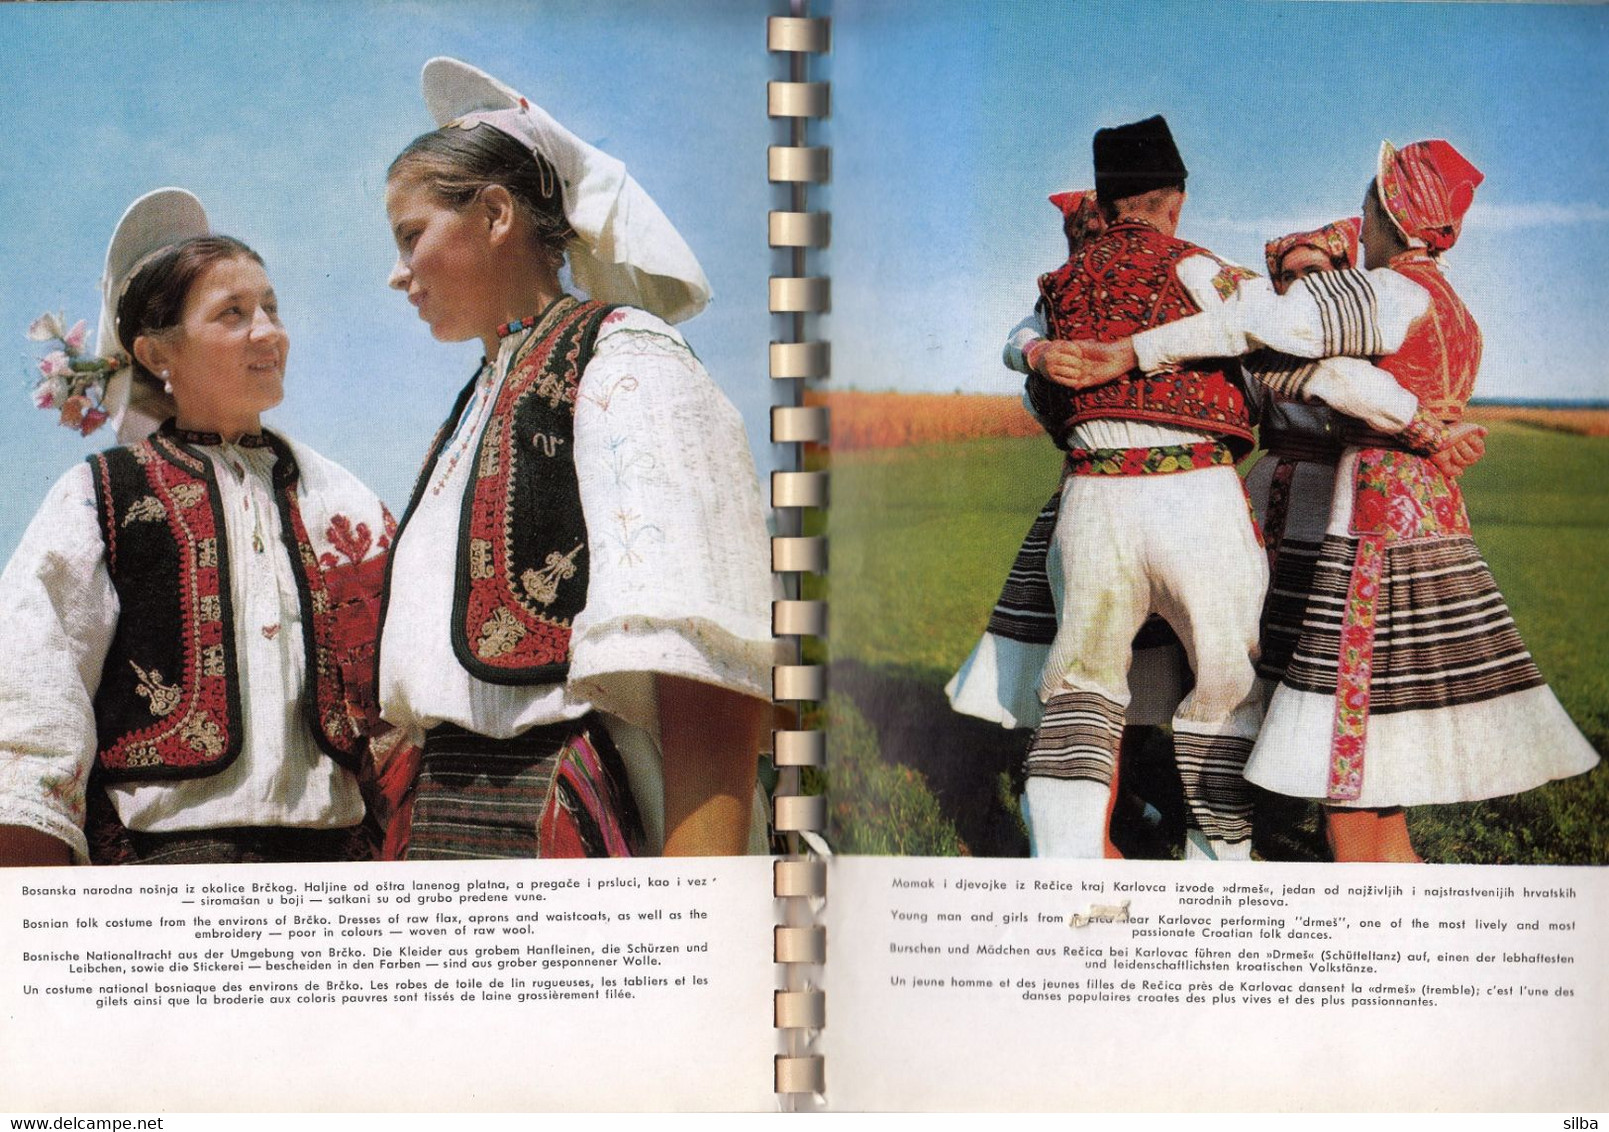 Folk costumes, Slovenia, Kosovo, Croatia, Bosnia, Serbia, Montenegro, Macedonia